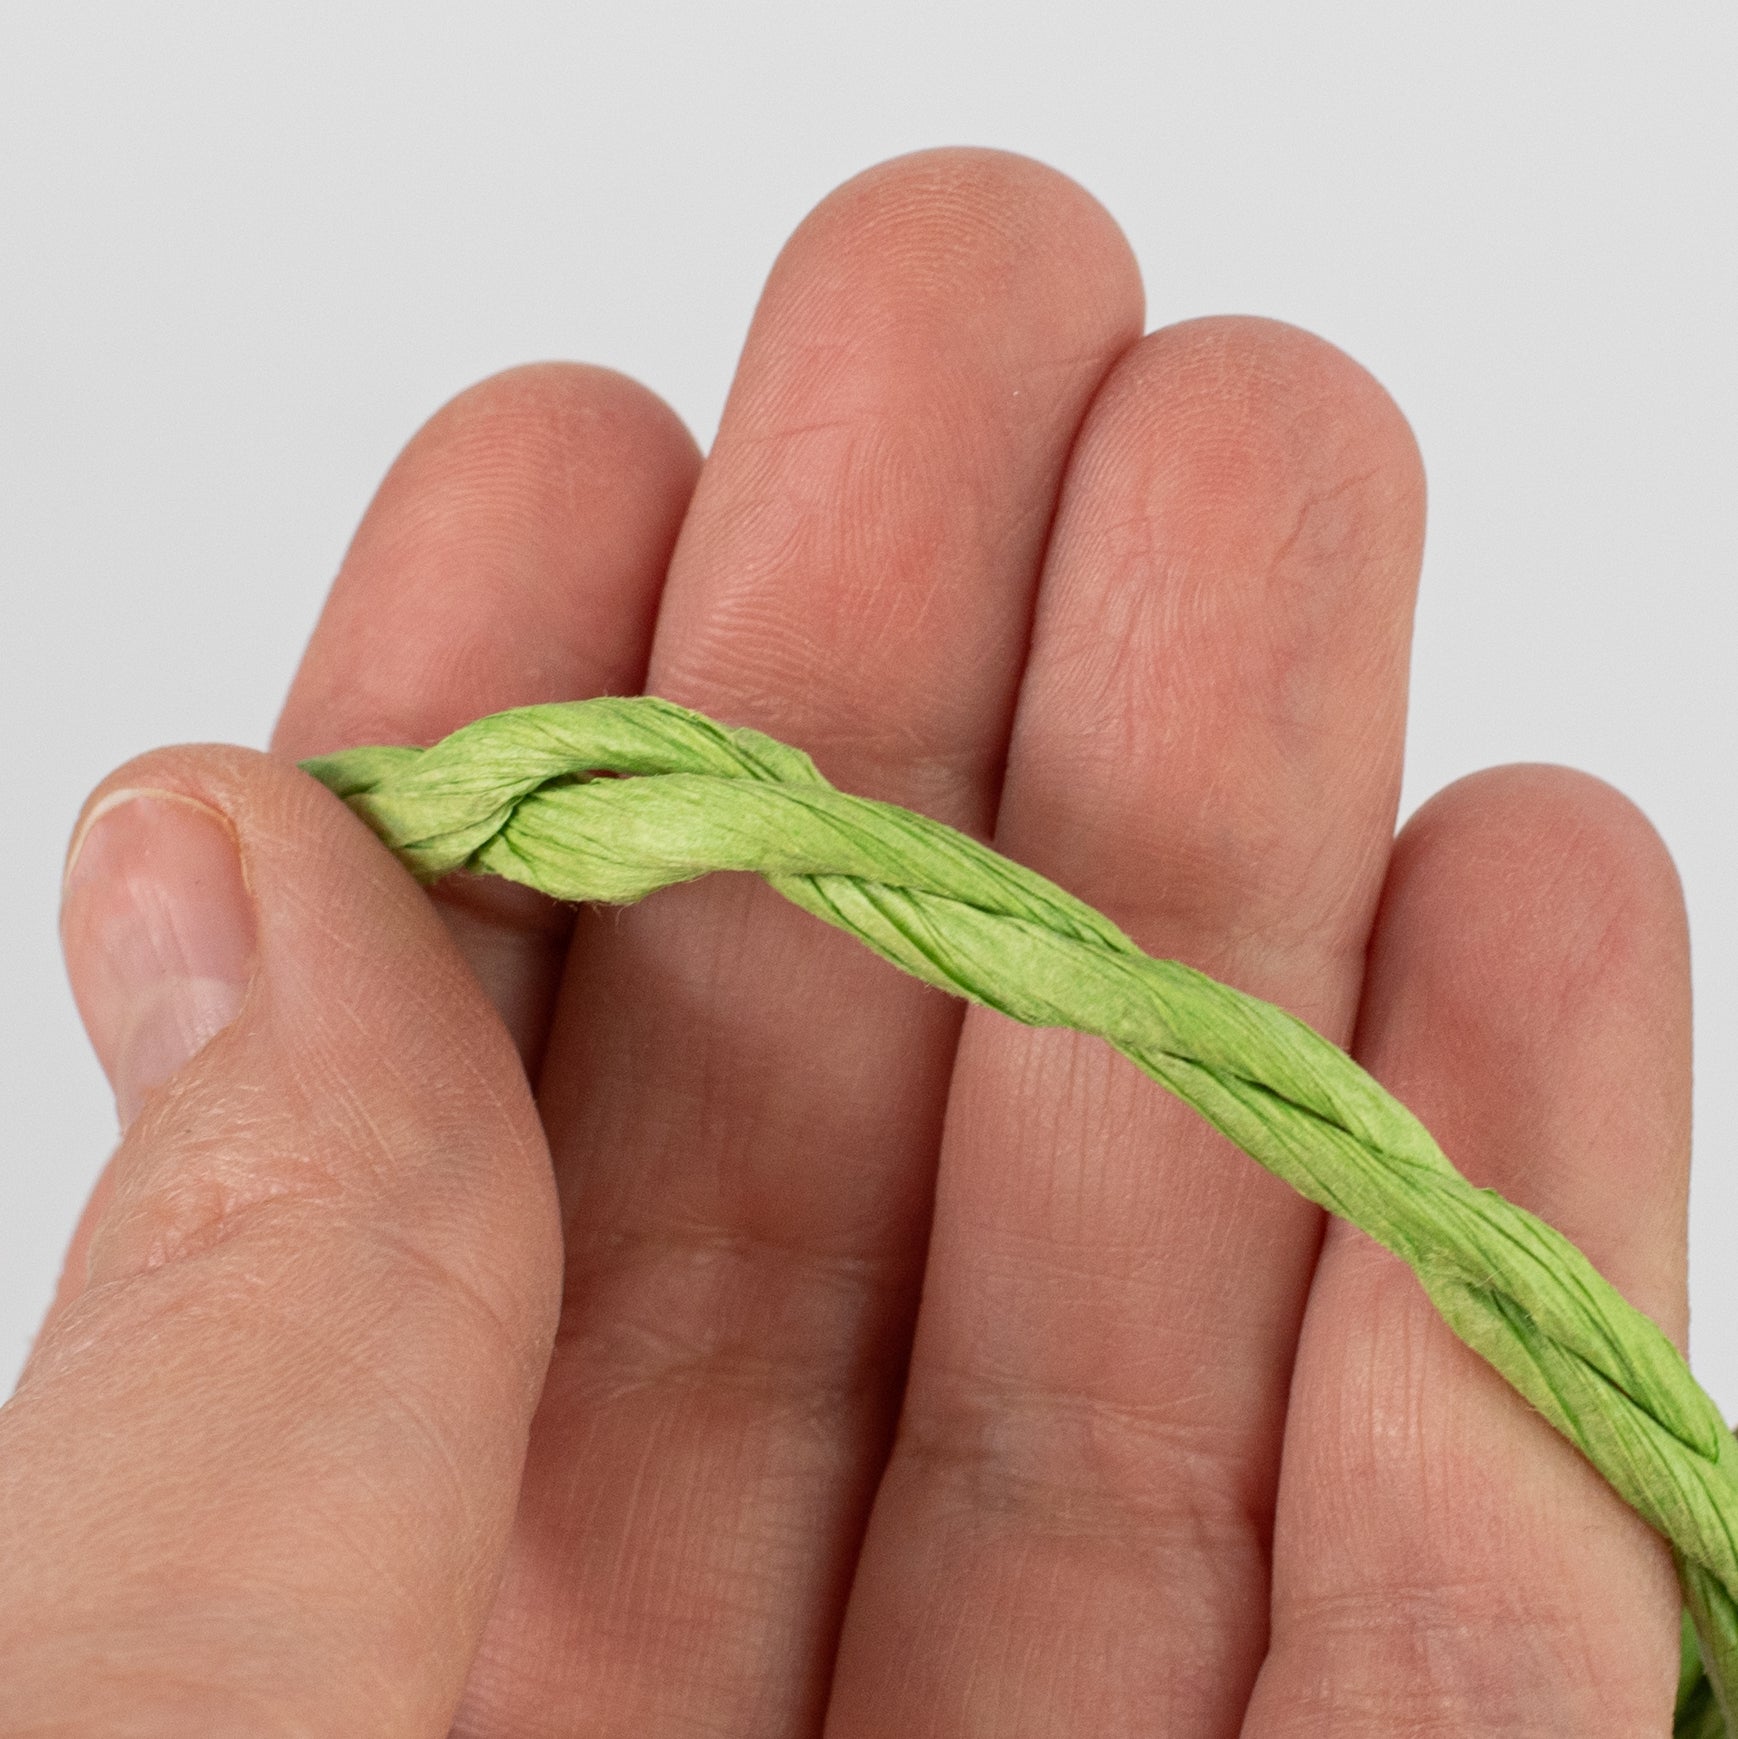 16' Paper Rope Bundle: Fresh Green